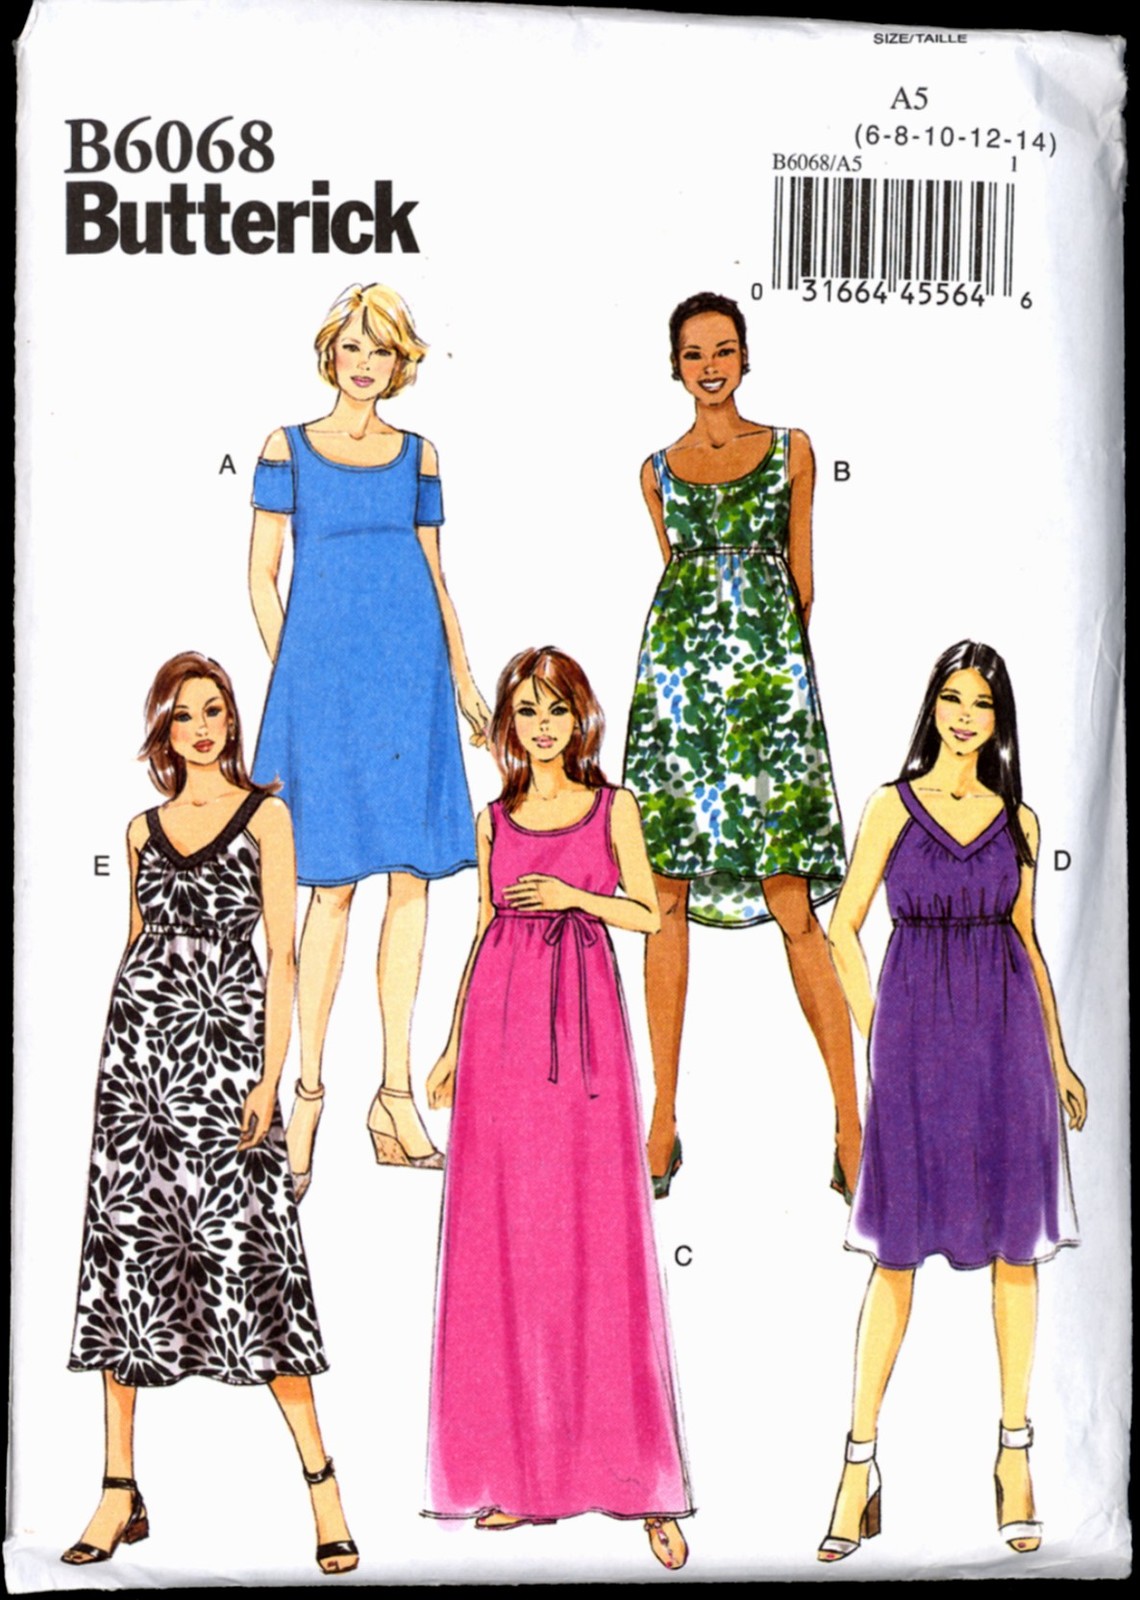 Unc Sz 6 8 10 12 14 Easy Maternity Dress Butterick 6068 Pattern Bust 30 1/2 – 36 - $6.99